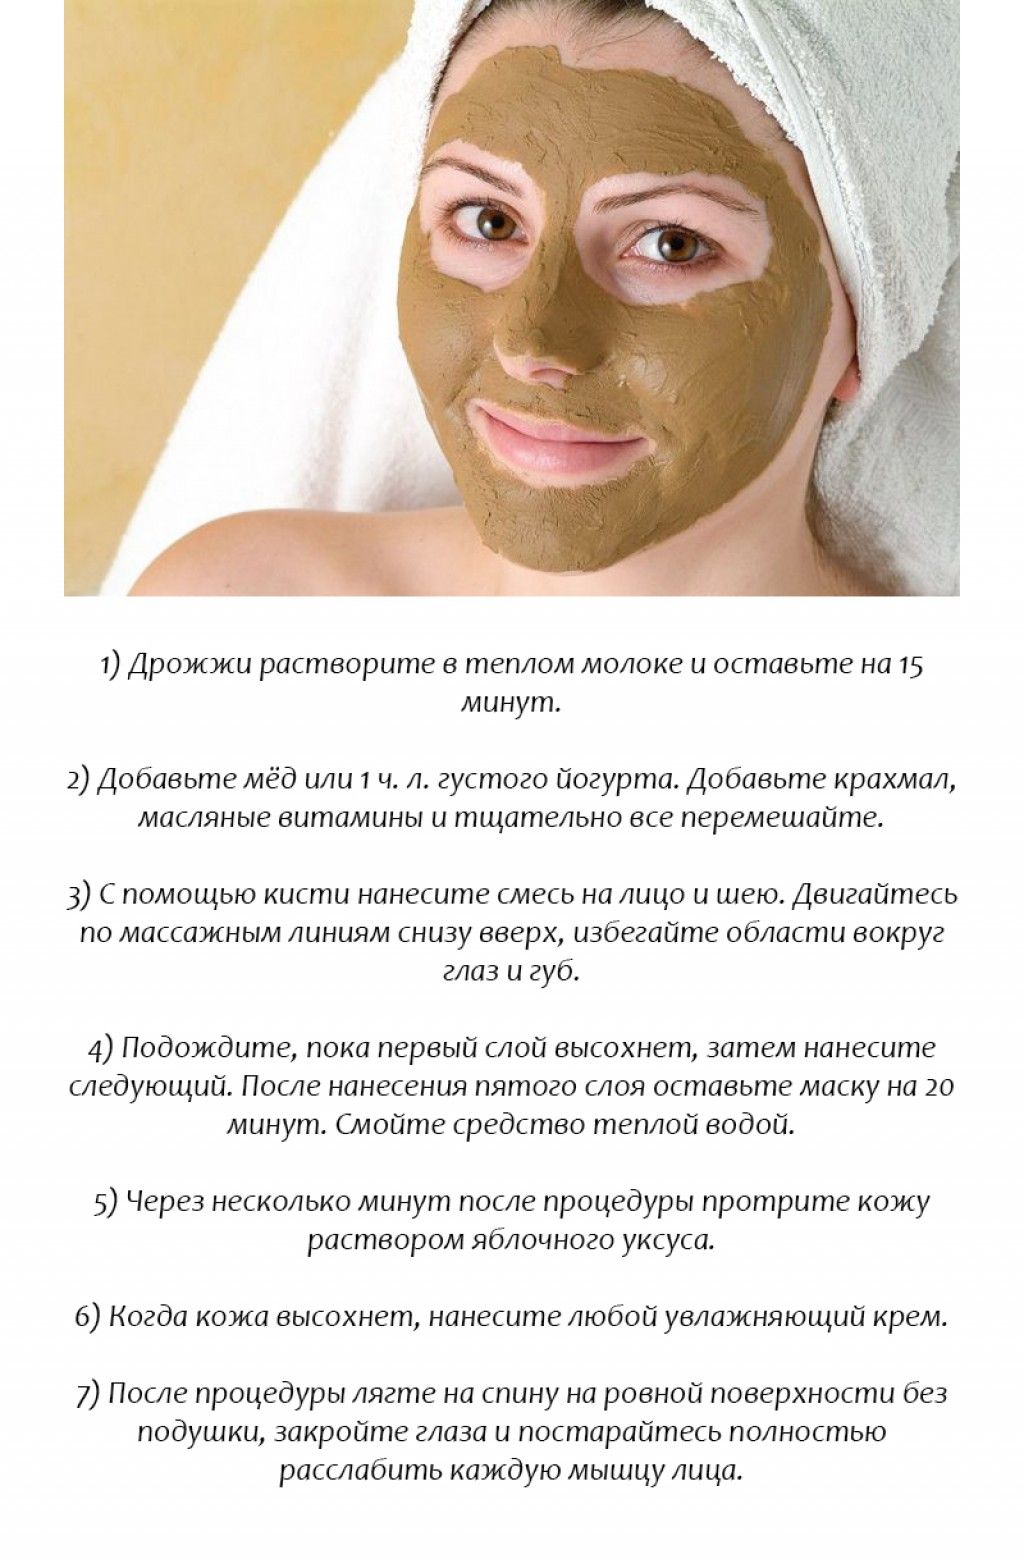 В какое время делать маски для лица. М̆̈ӑ̈с̆̈к̆̈й̈ д̆̈л̆̈я̆̈ л̆̈й̈ц̆̈ӑ̈. Маска для лица. Рецептуры масок для лица. Маска для лица от морщин.